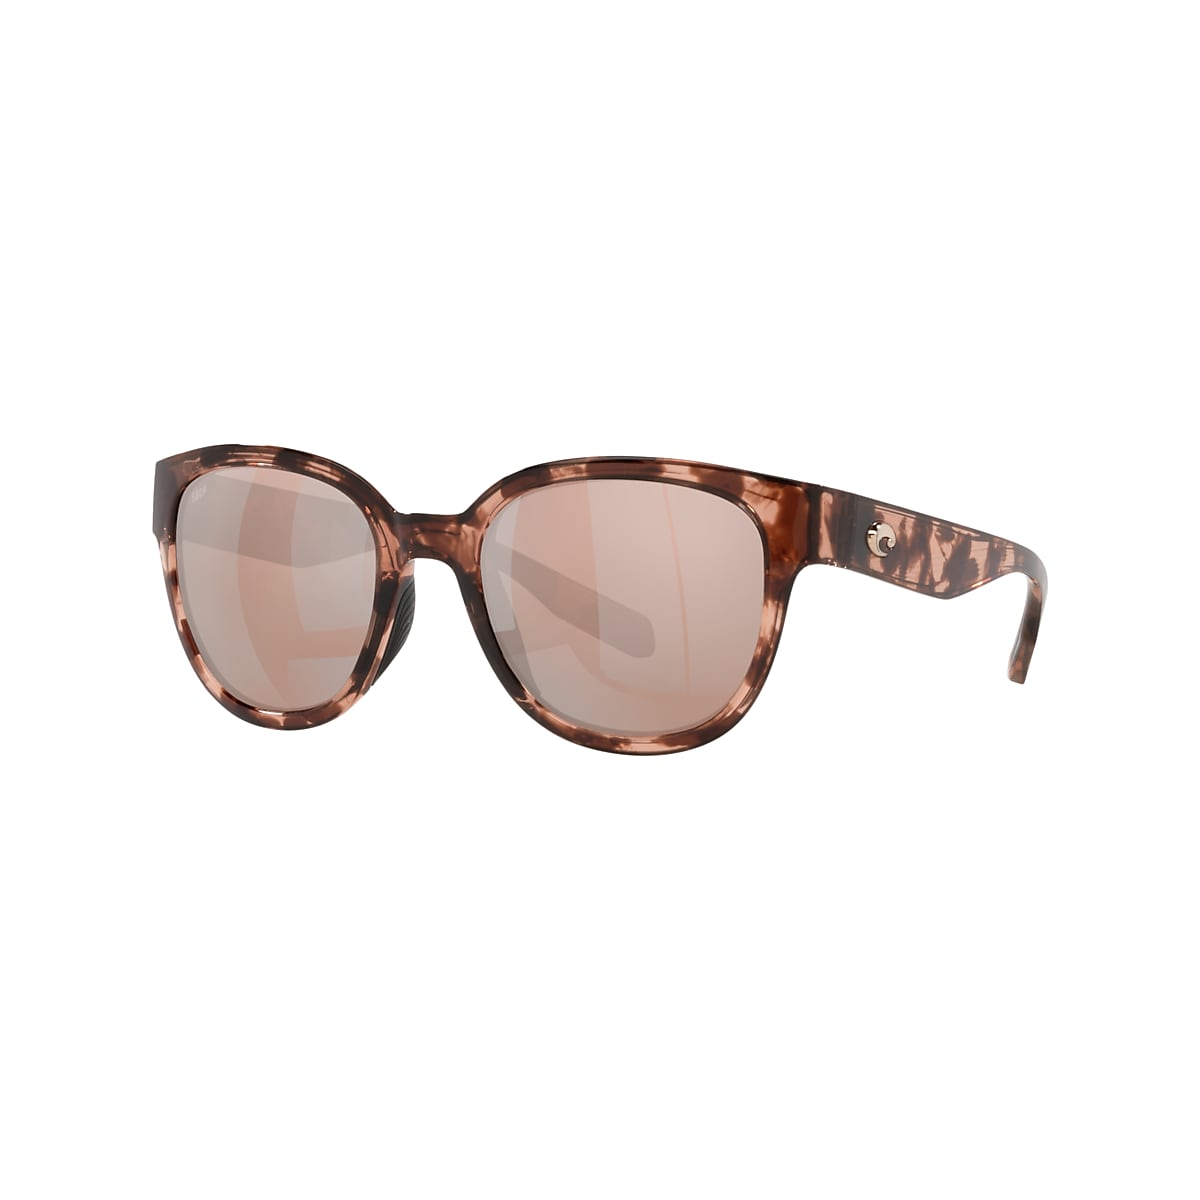 Louis Vuitton Women's Dark Tortoise Cameleon Sunglasses W Z0872W